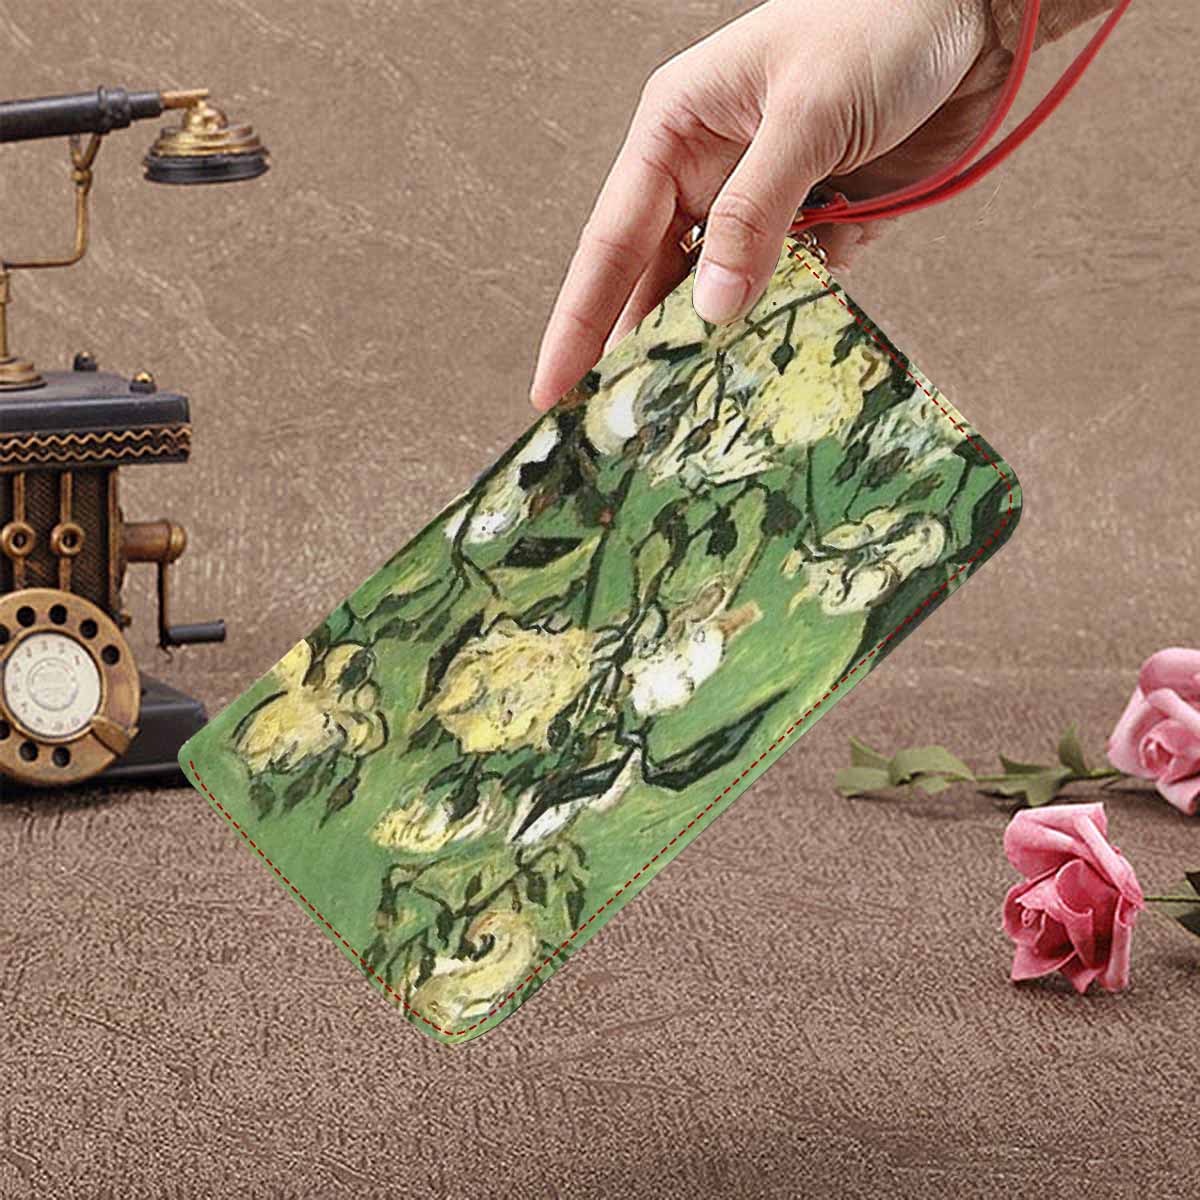 Vintage floral print, womens wallet, clutch purse, red trim, Design 55